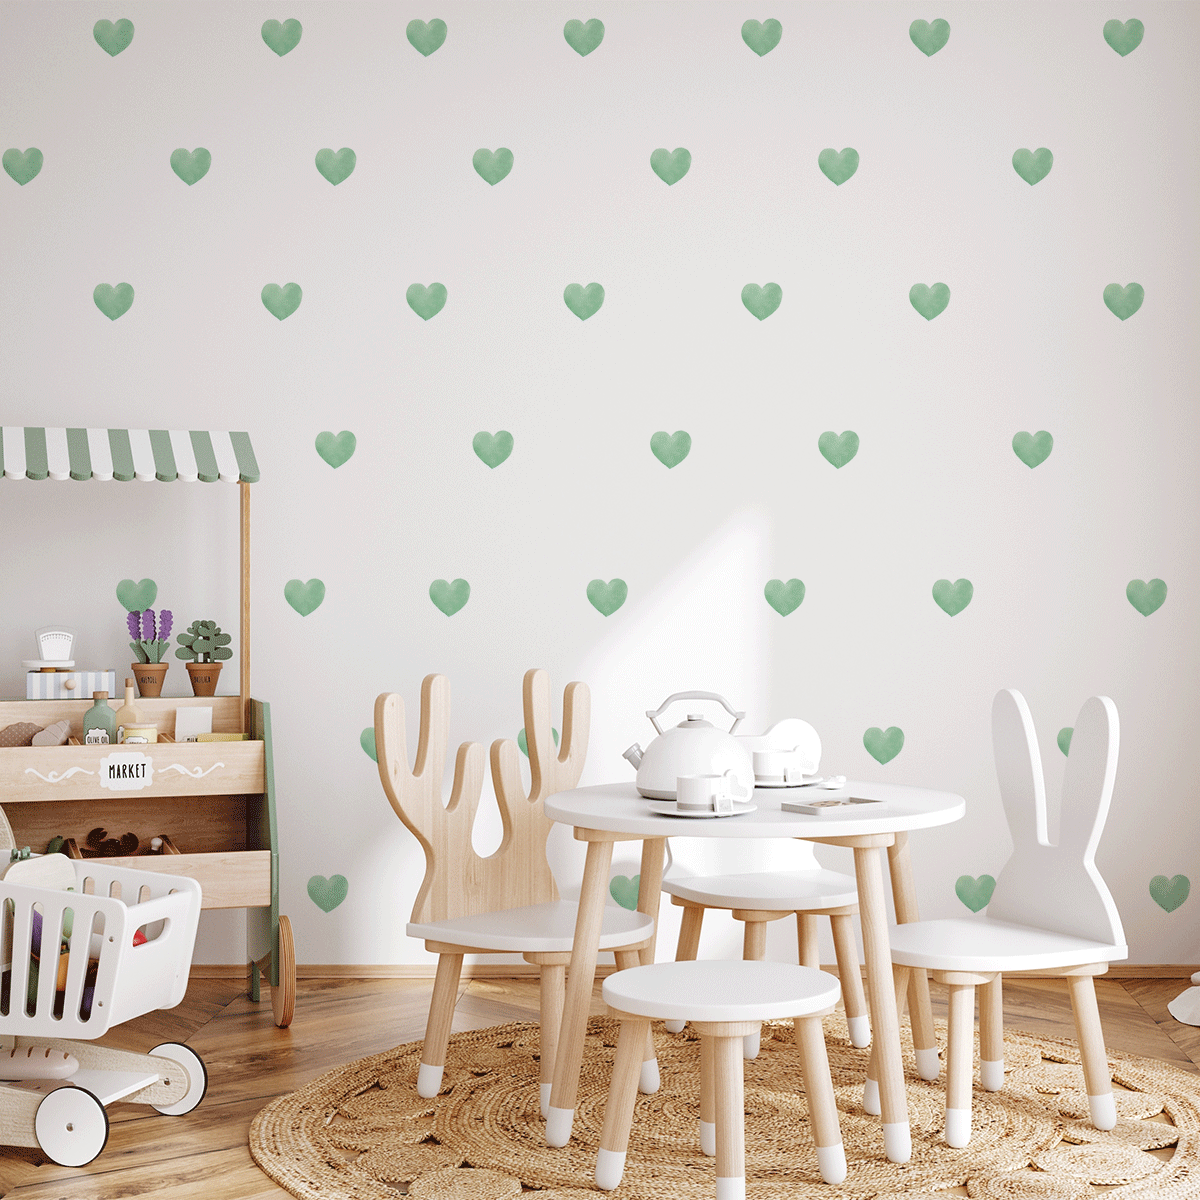 Hearts wall stickers - Green watercolour hearts